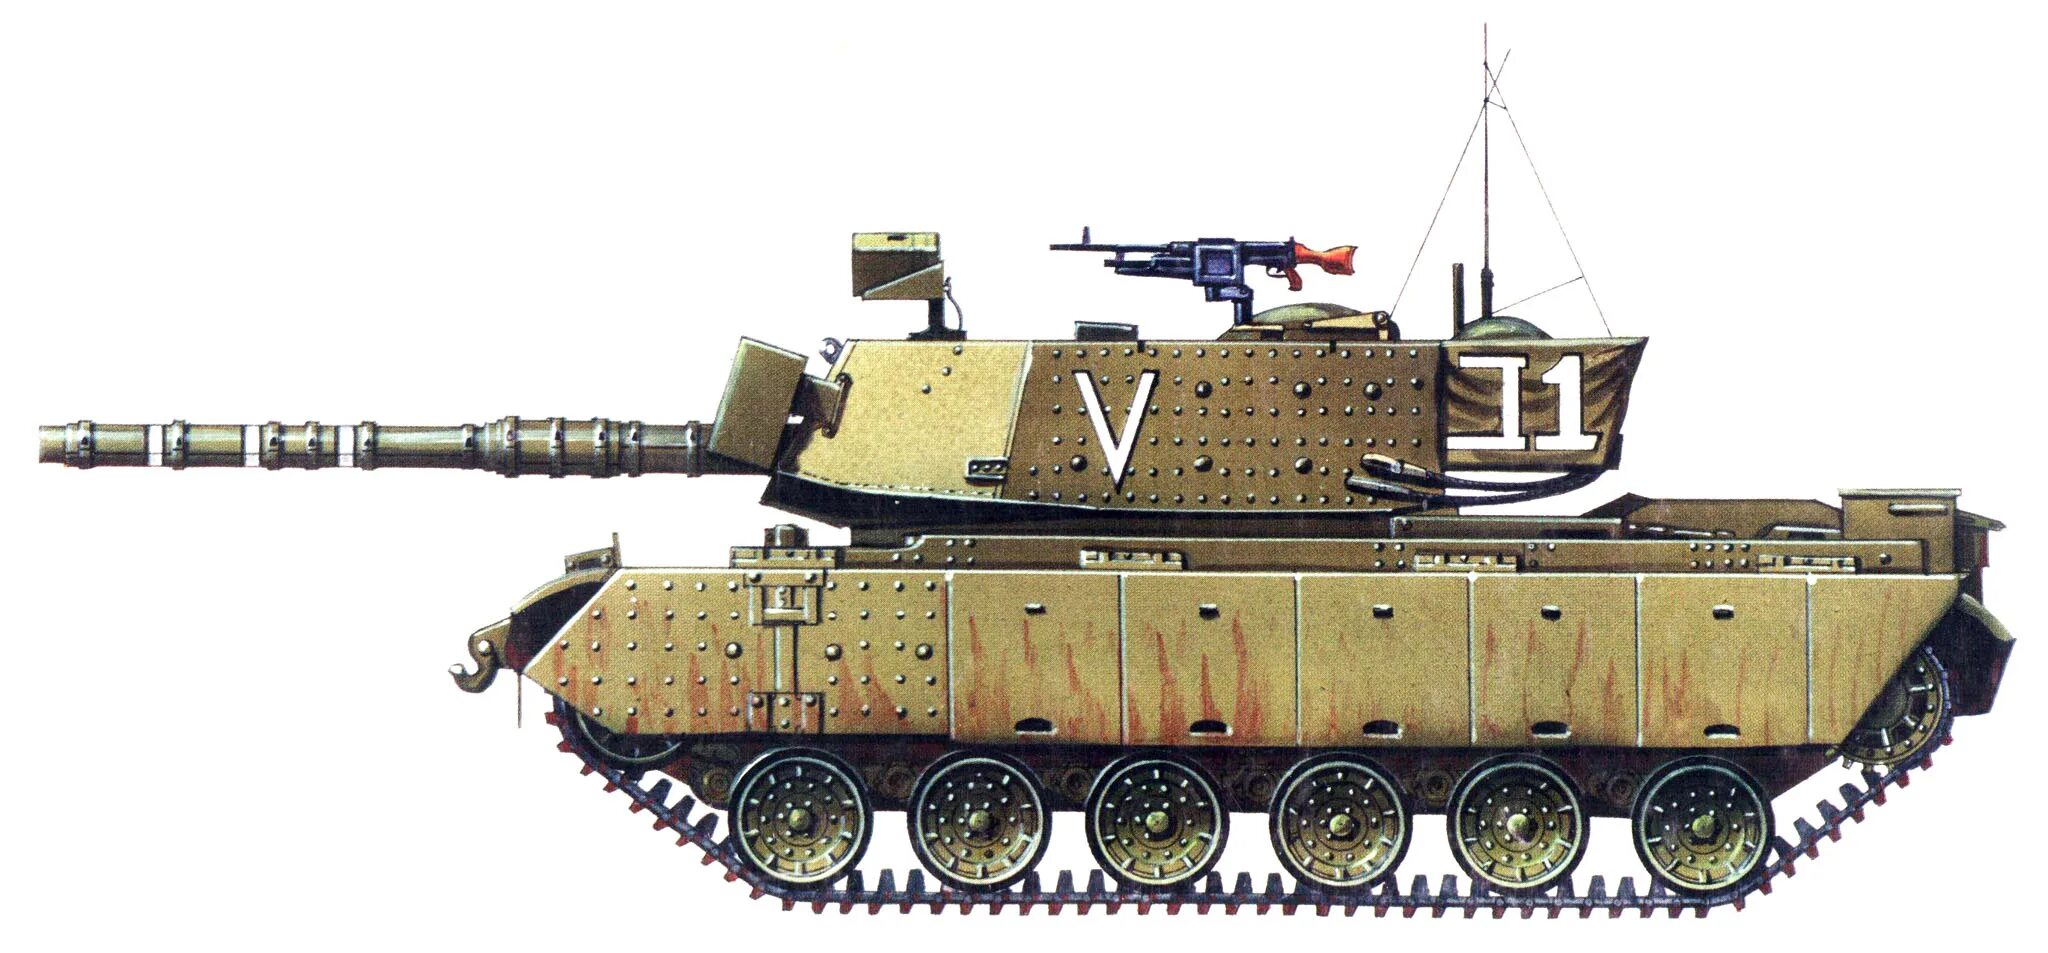 M60 Magach. М 60 танк сбоку. М60 сбоку. M60 танк сбоку.